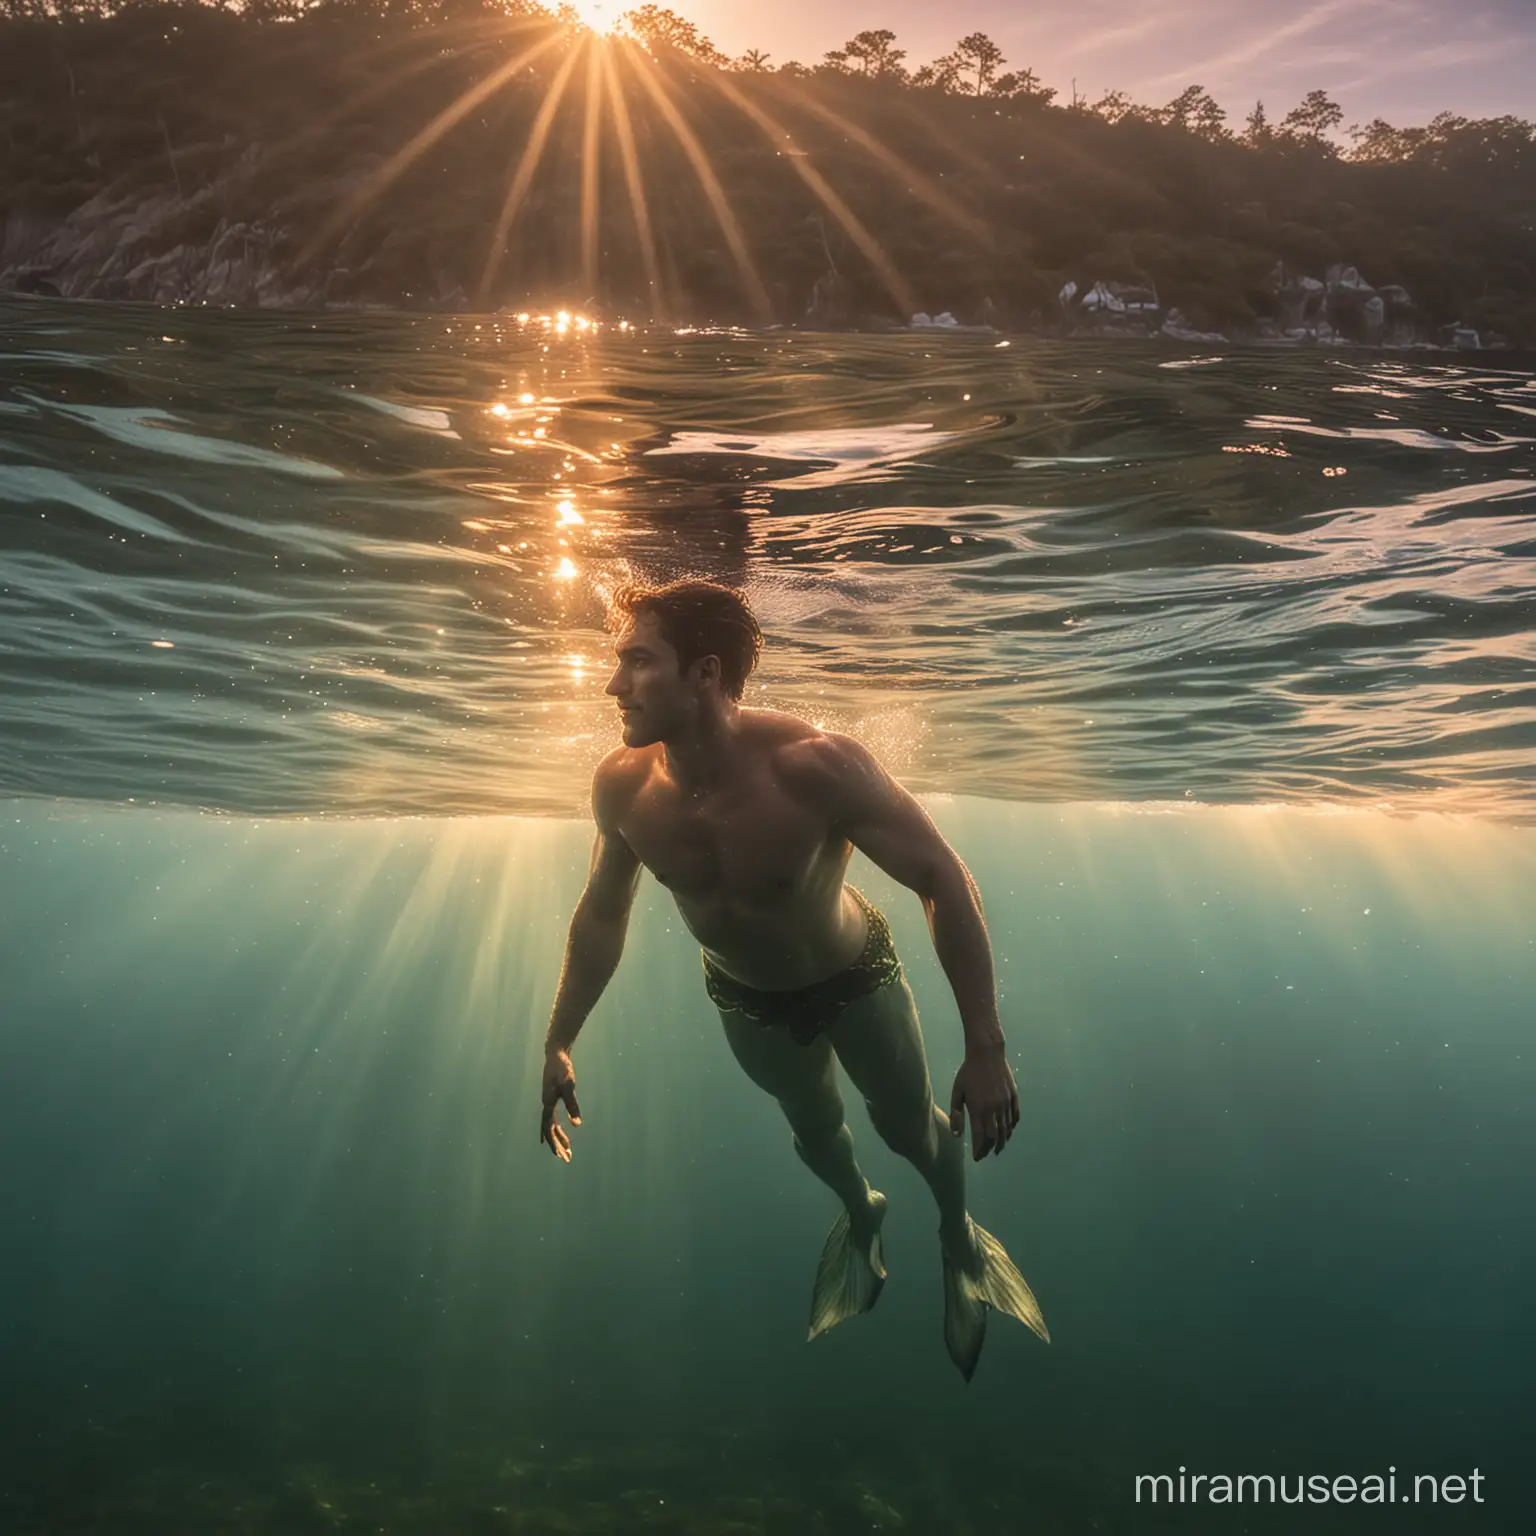 Majestic Merman Swimming in Sunset Waters